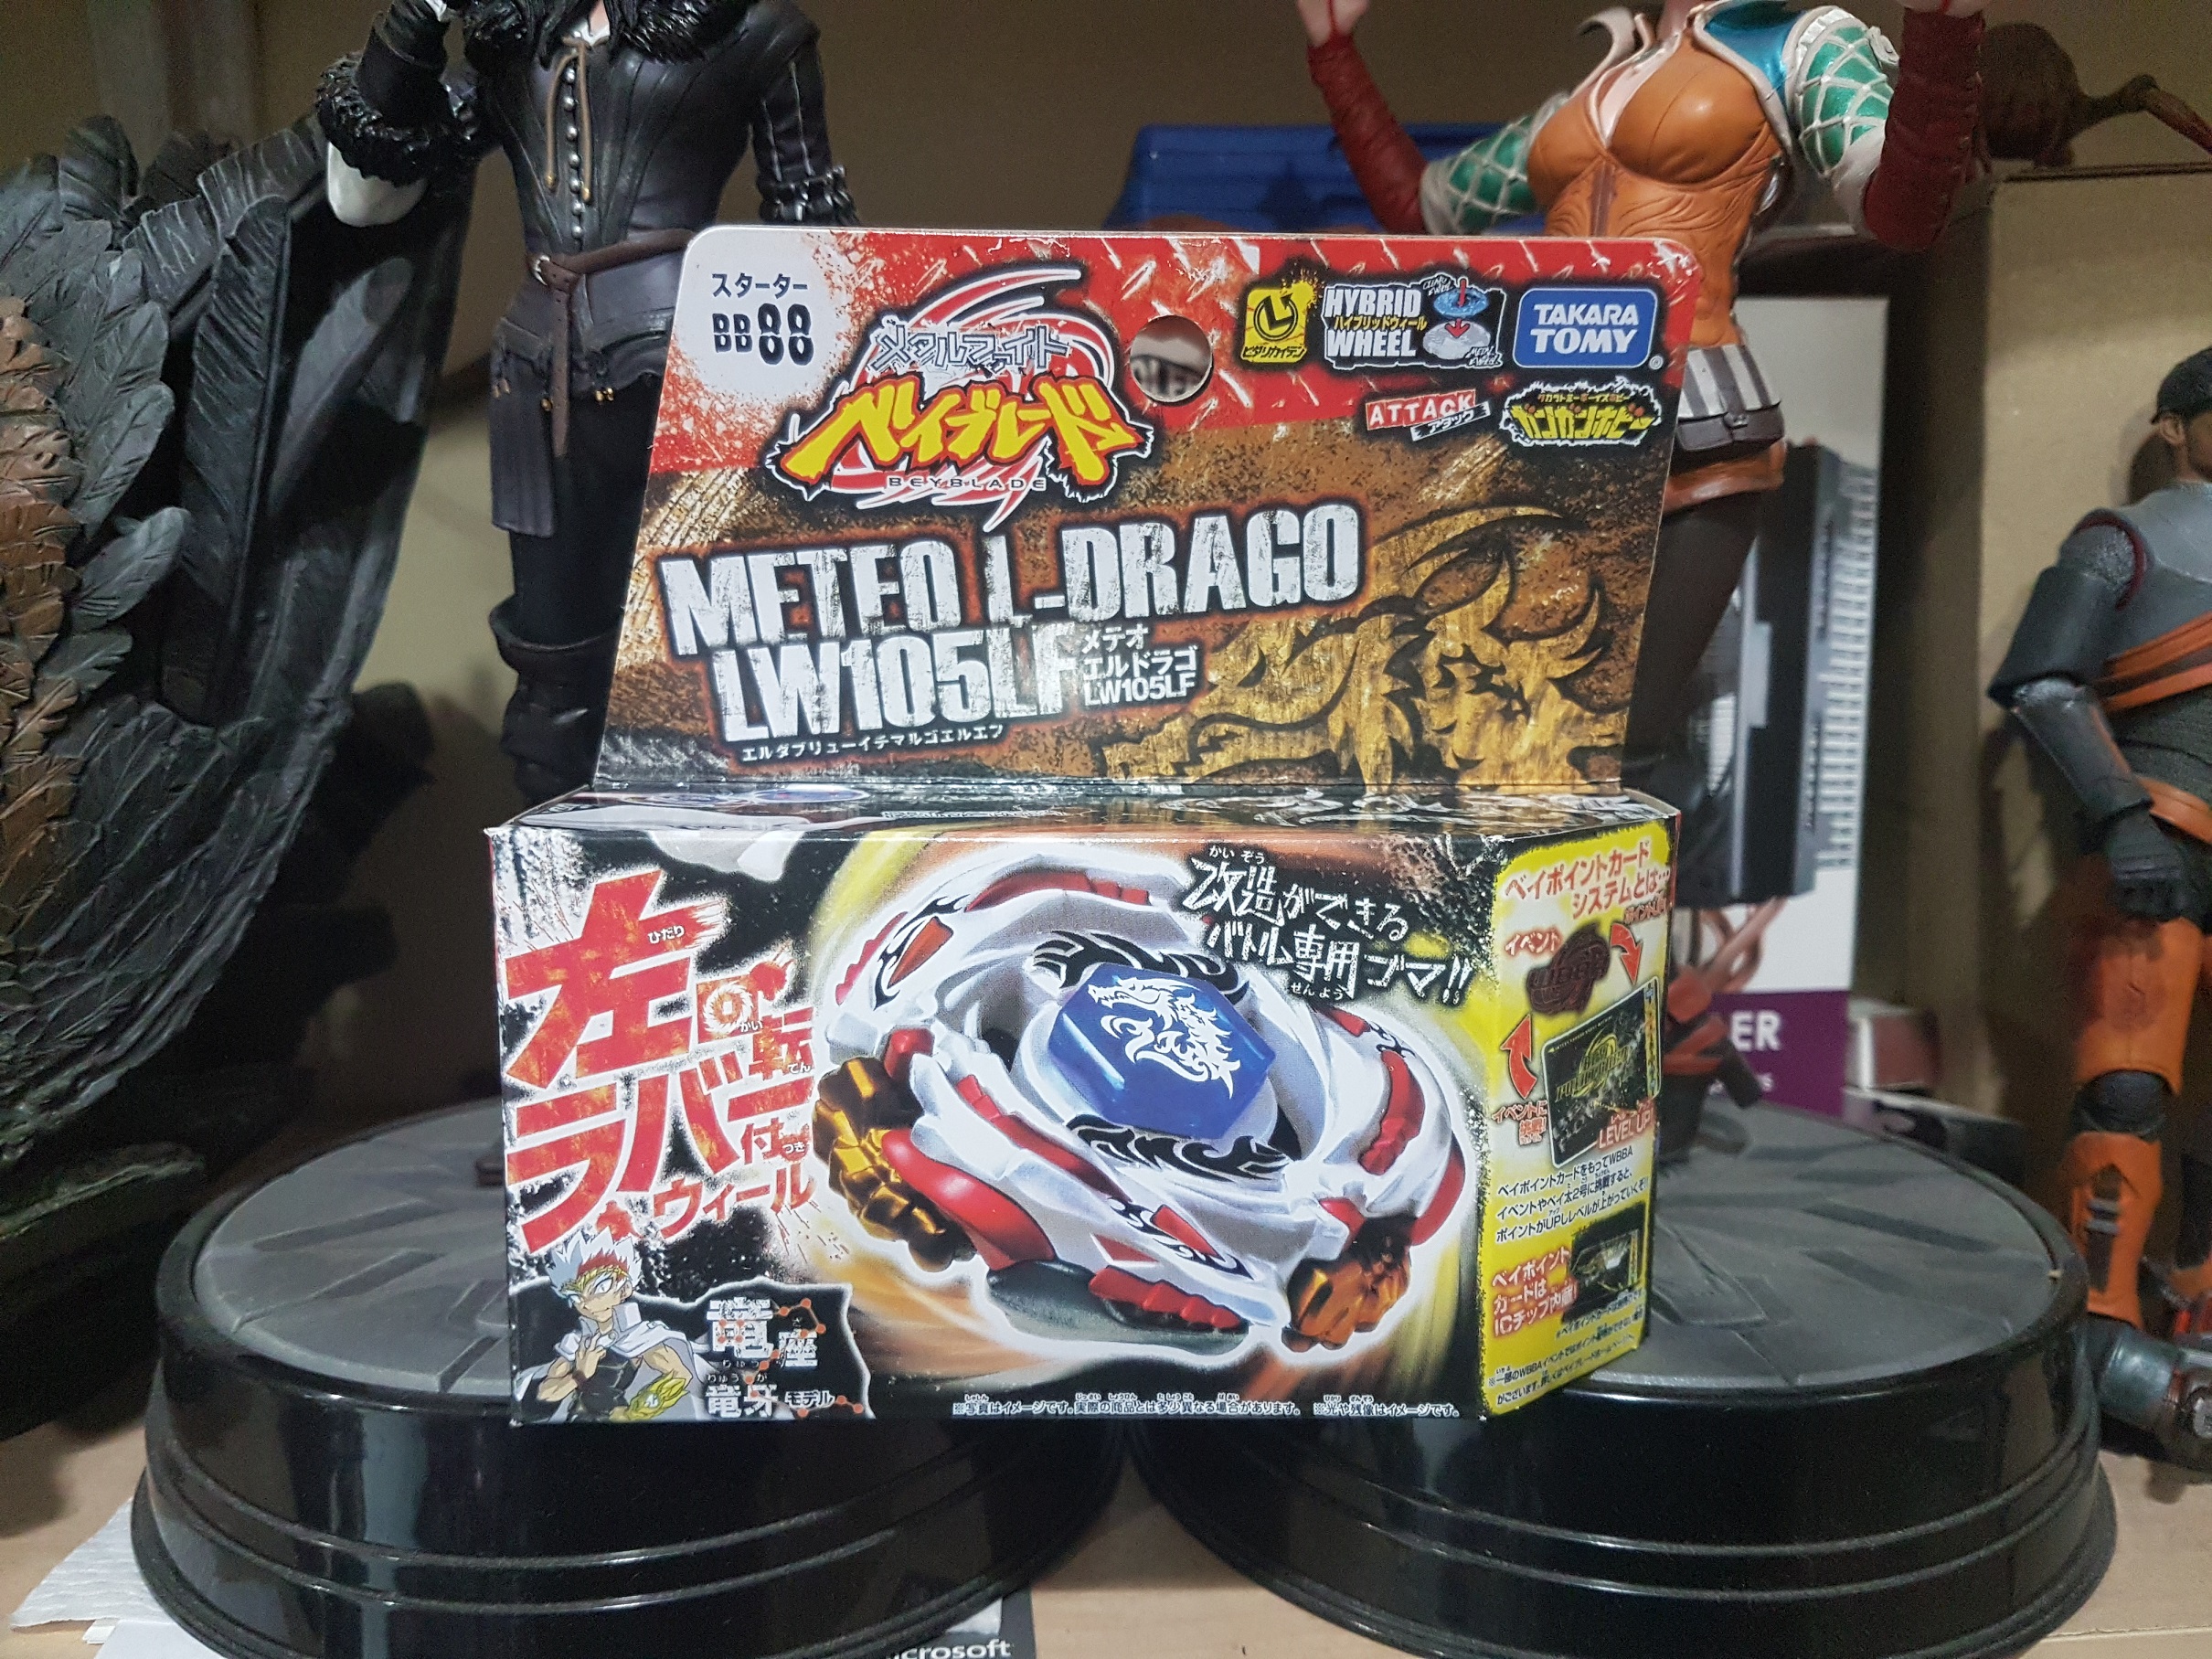 Takara Tomy Beyblade Metal Fusion Meteo L-drago Lw105lf Bb88